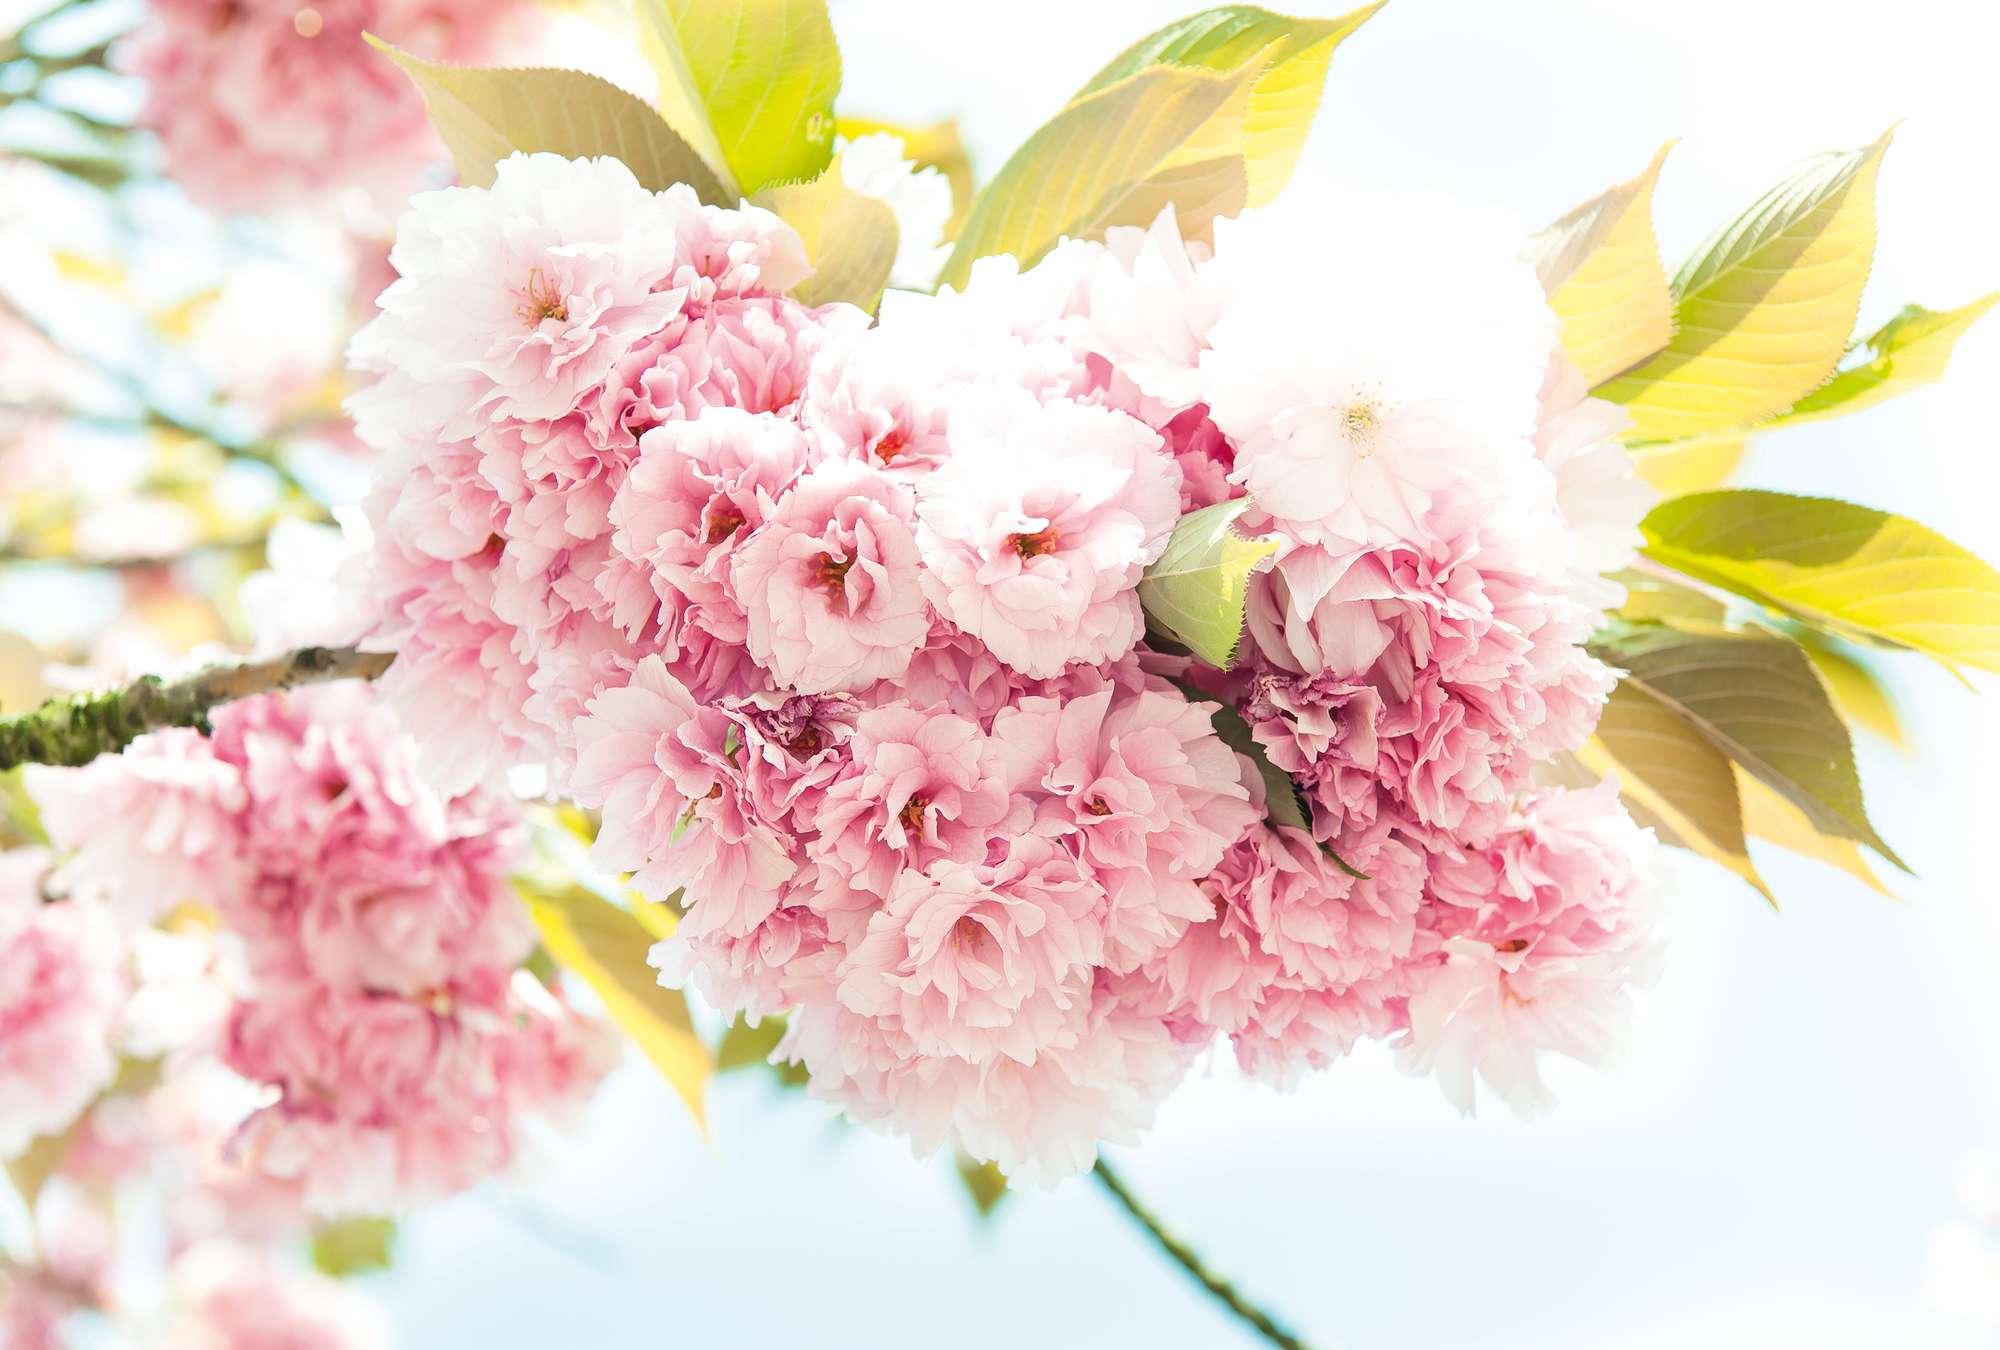             Frühling, rosa – Zarte Blüten in 3D Optik und XXL Format
        